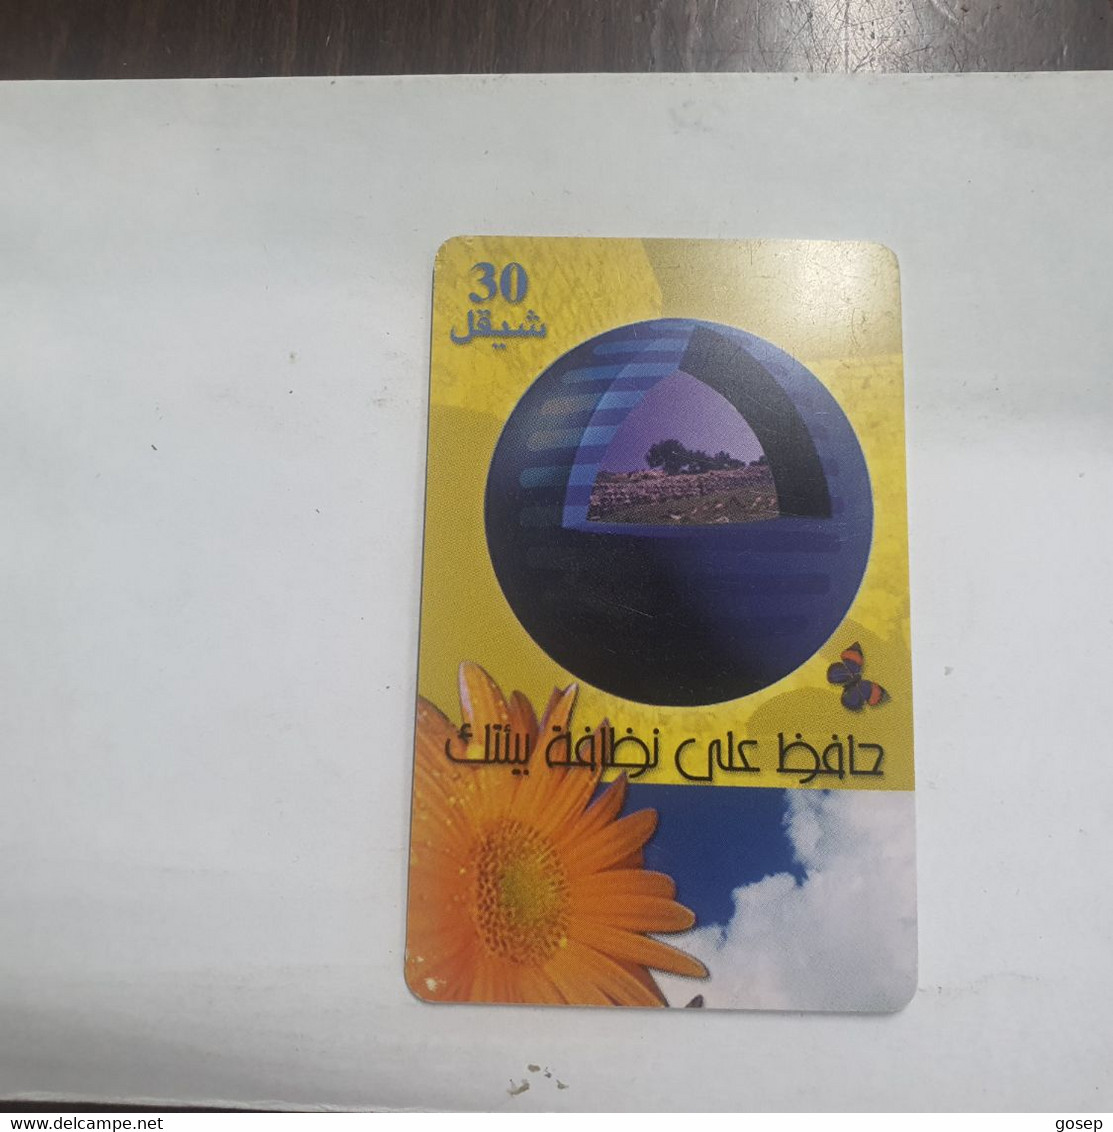 Plastine-(PS-PAL-0013D)-Clean Environment-(564)(9/2000)(30₪)(0056030840)-used Card+1card Prepiad Free - Palestina